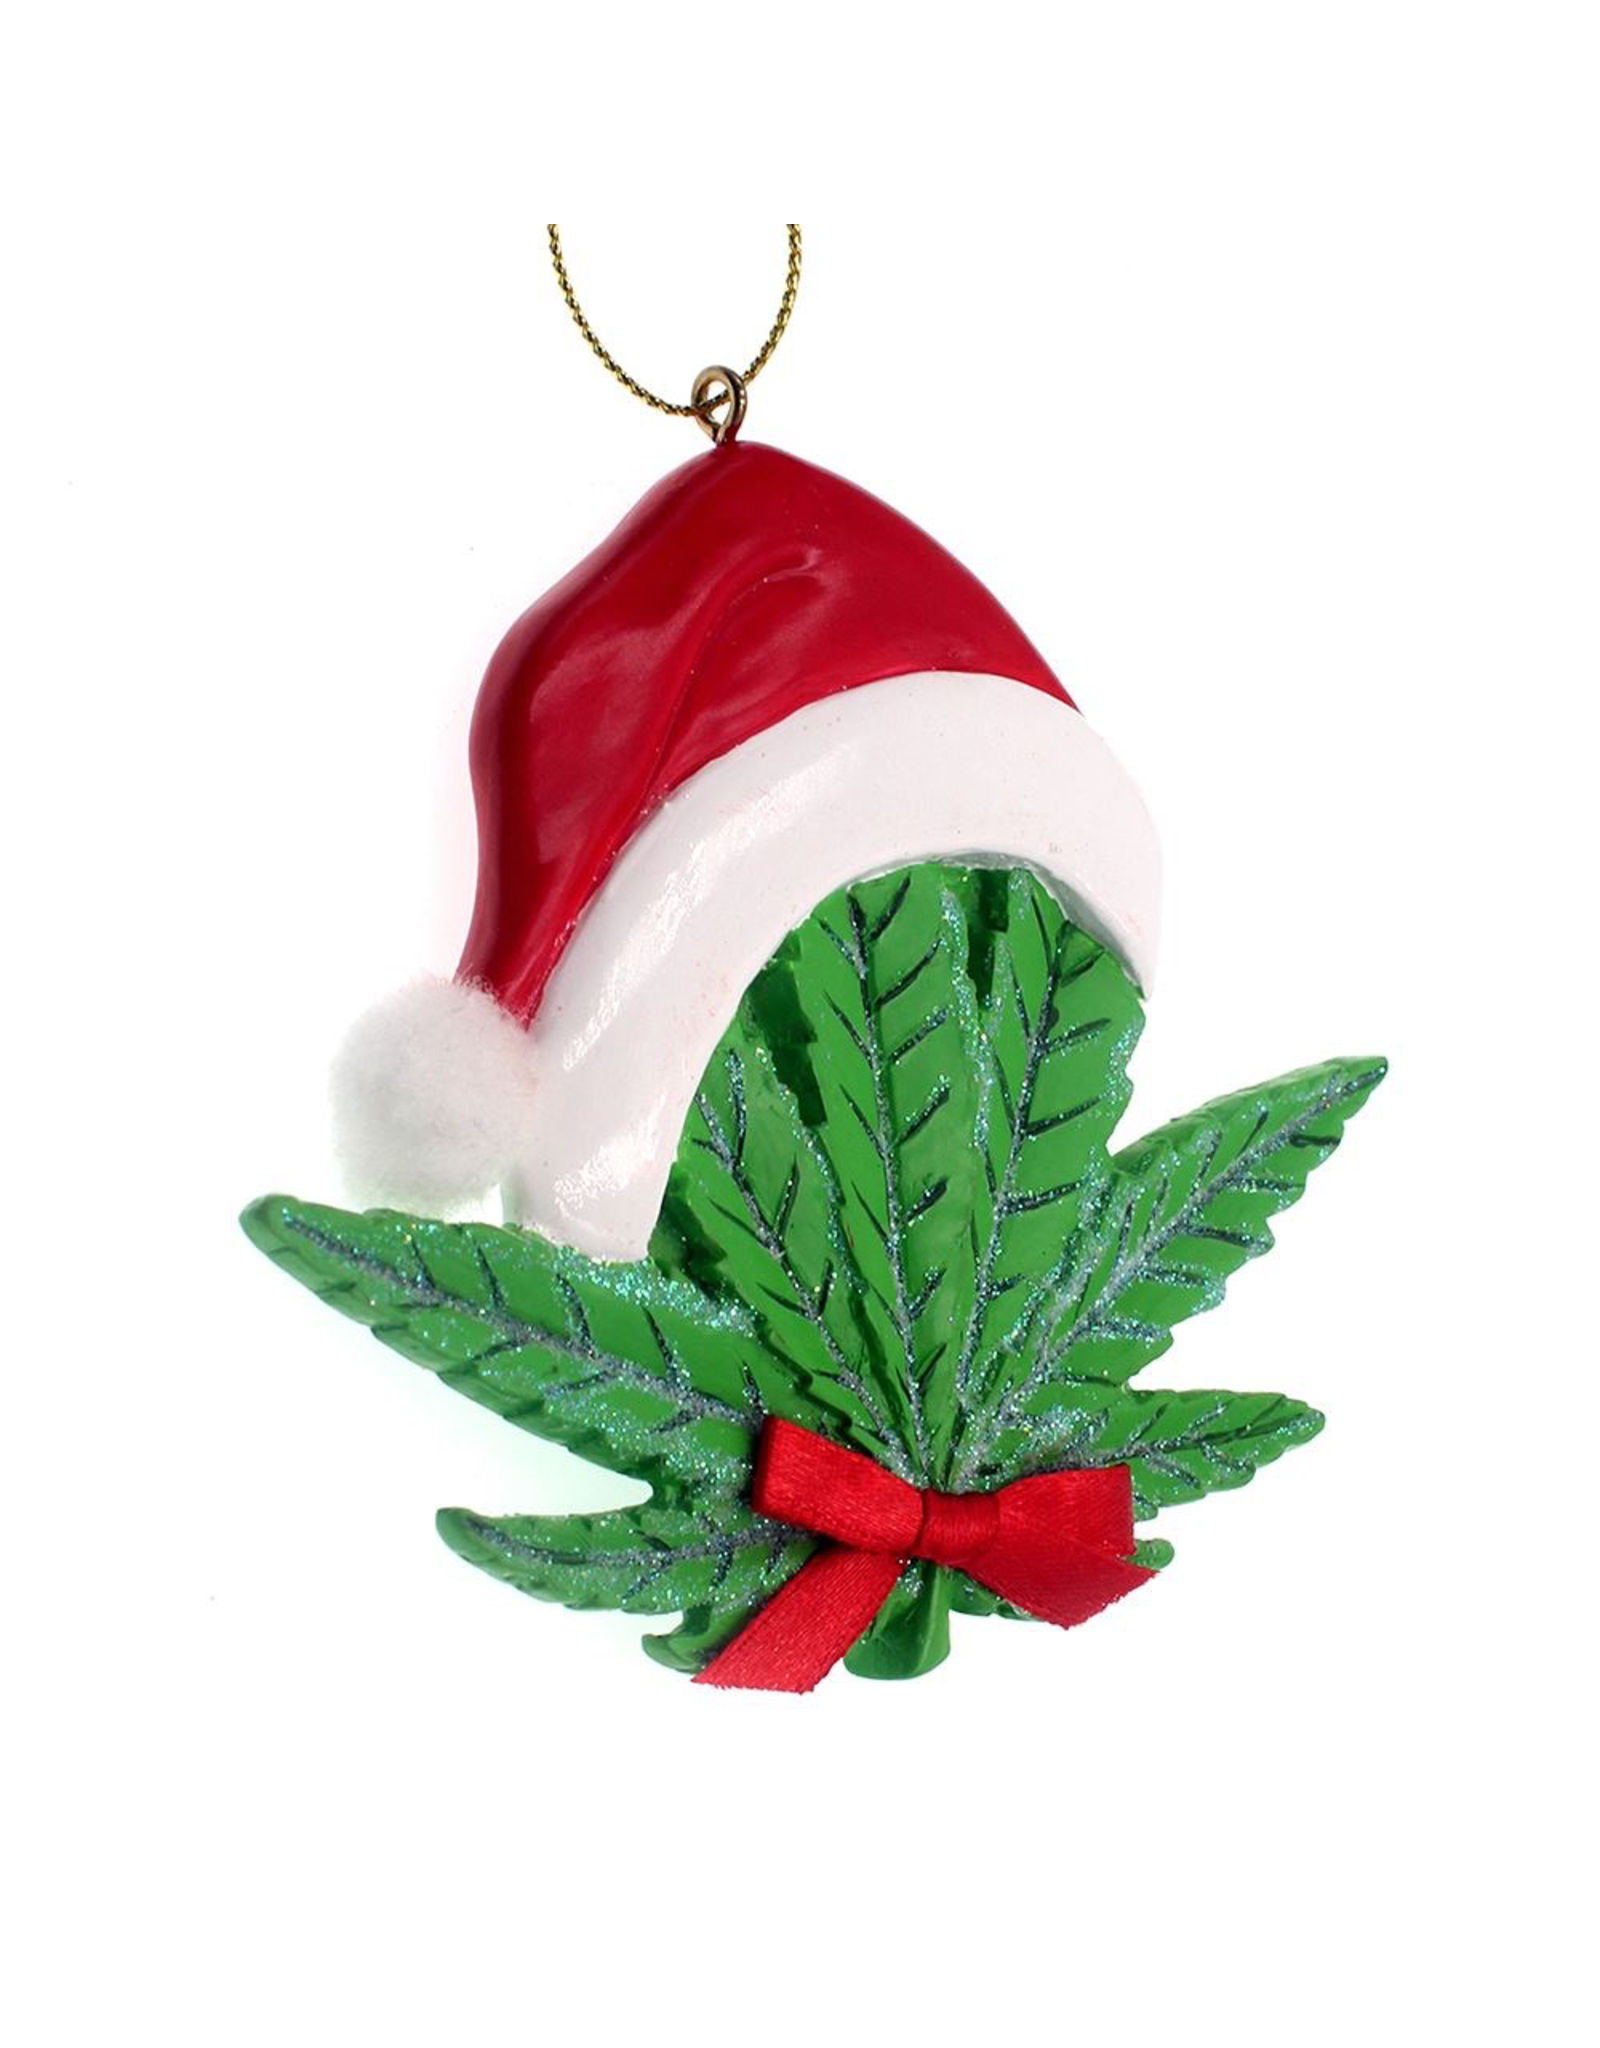 Kurt Adler Cannabis Leaf With Santa Hat Christmas Ornament